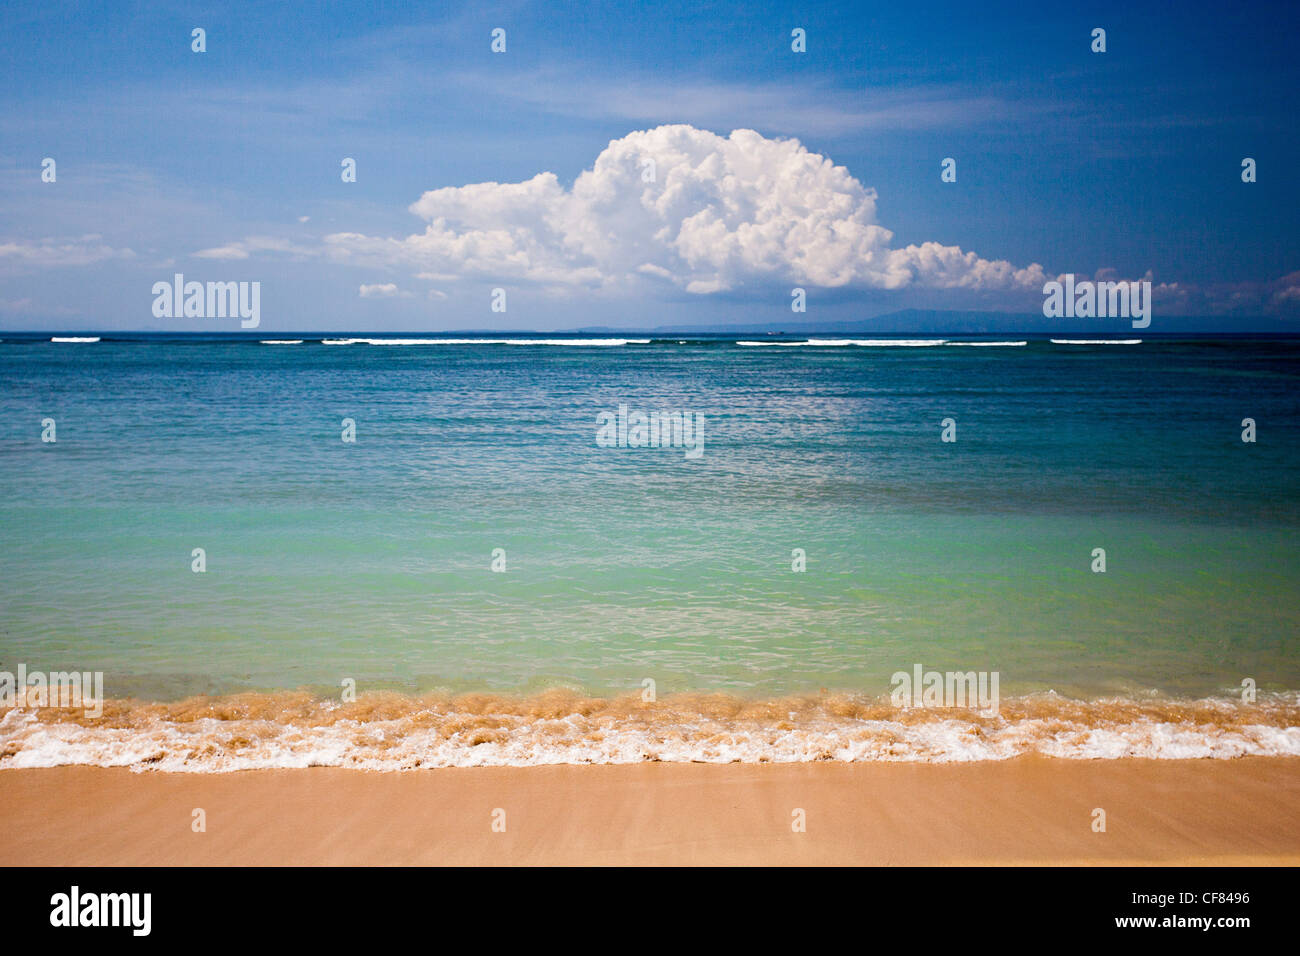 Indonesia, Asia, Bali Island, Laguna Nusa Dua, Resort, beach, cloud, wave, colours Stock Photo